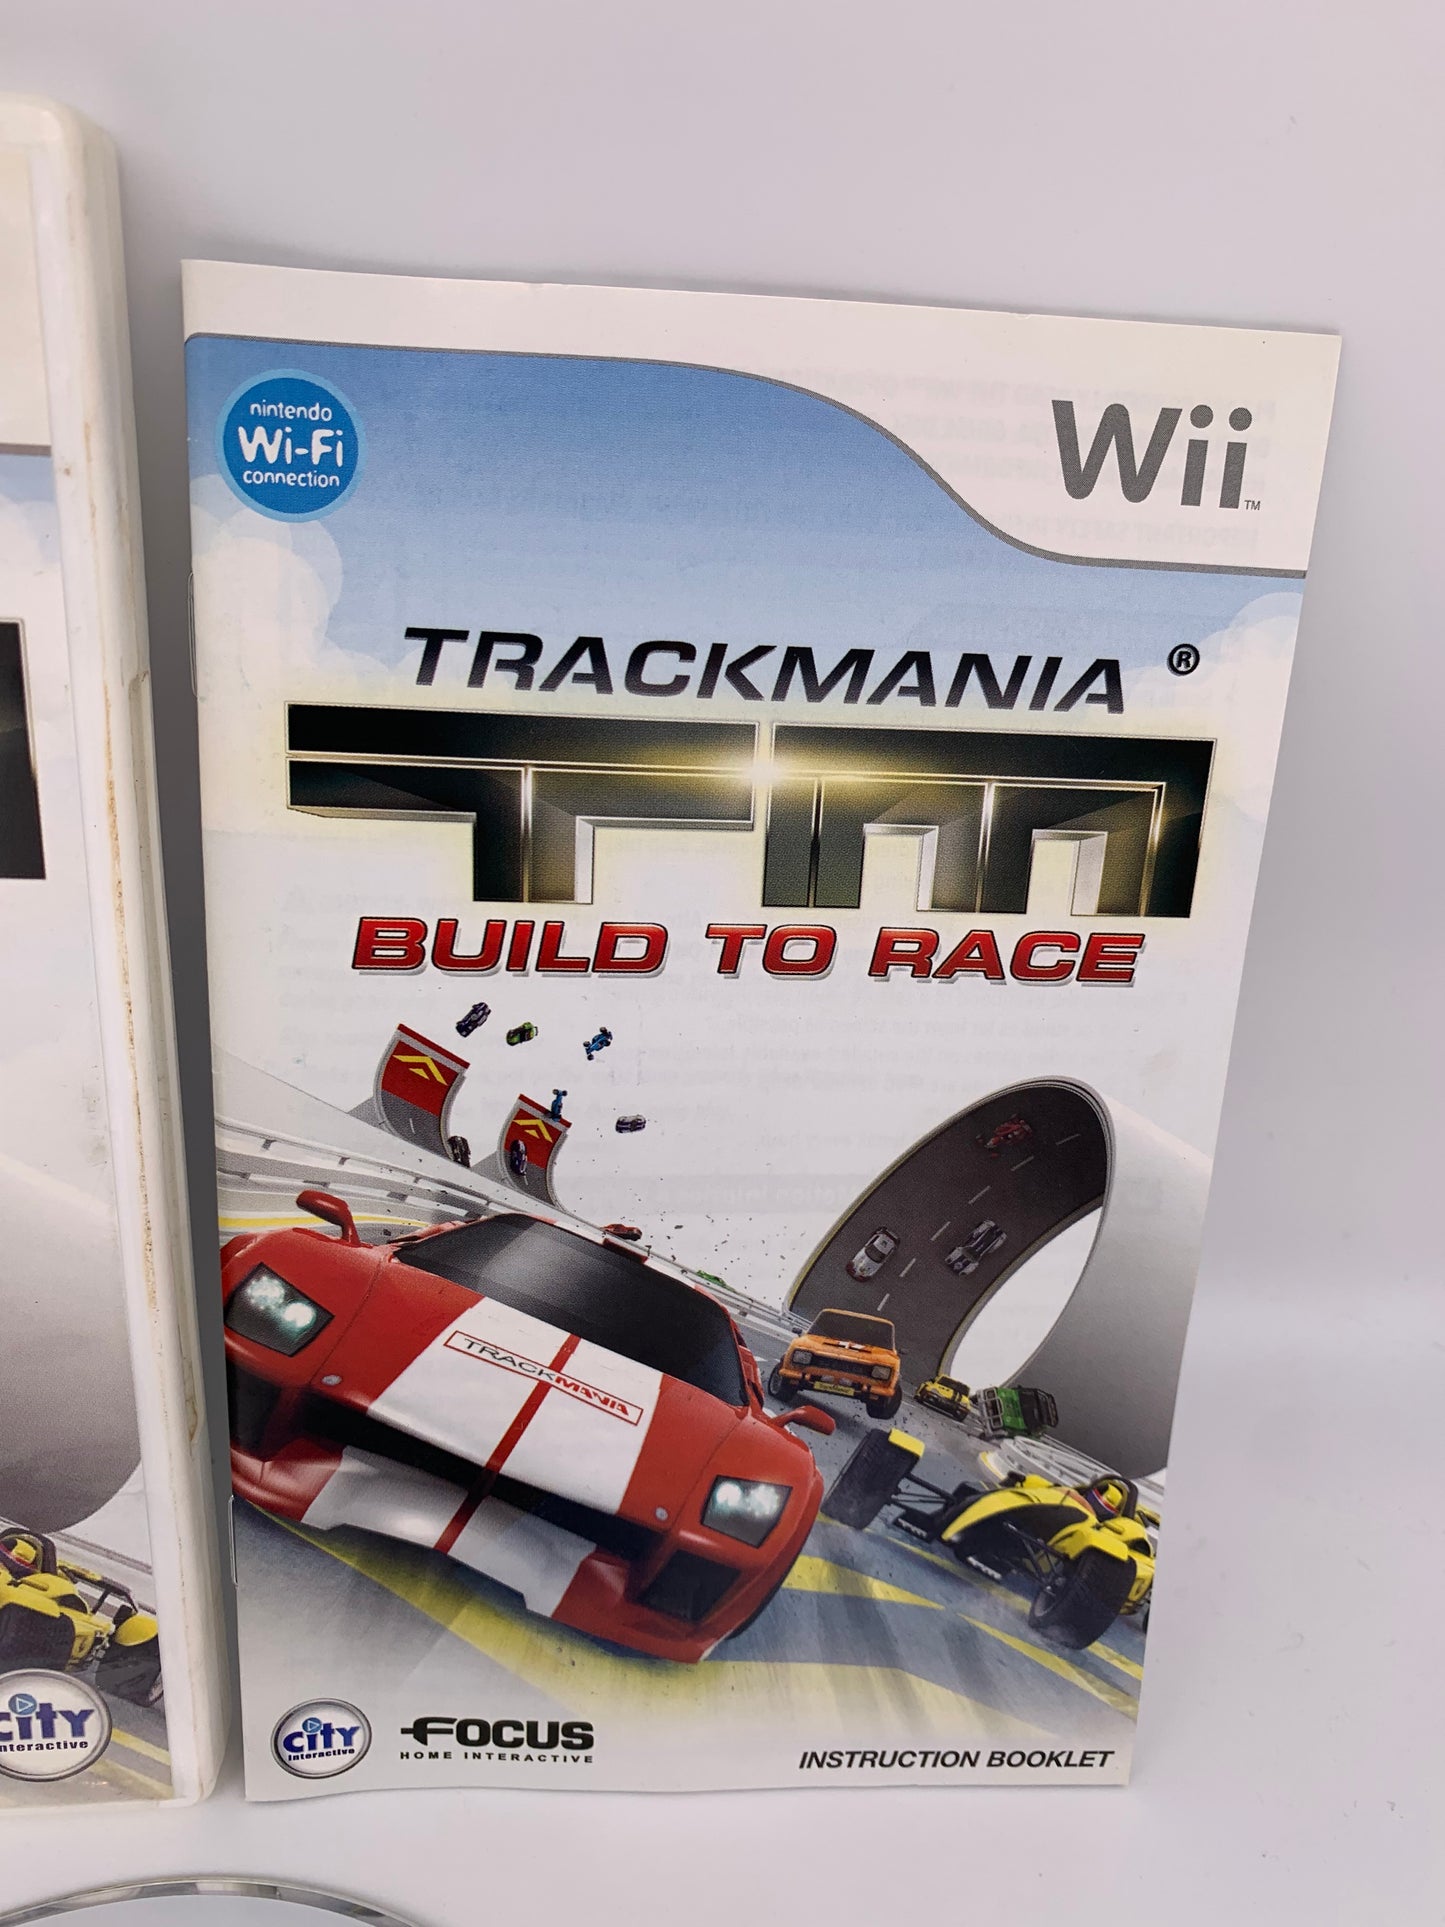 NiNTENDO Wii | TRACKMANiA BUiLD TO RACE TM